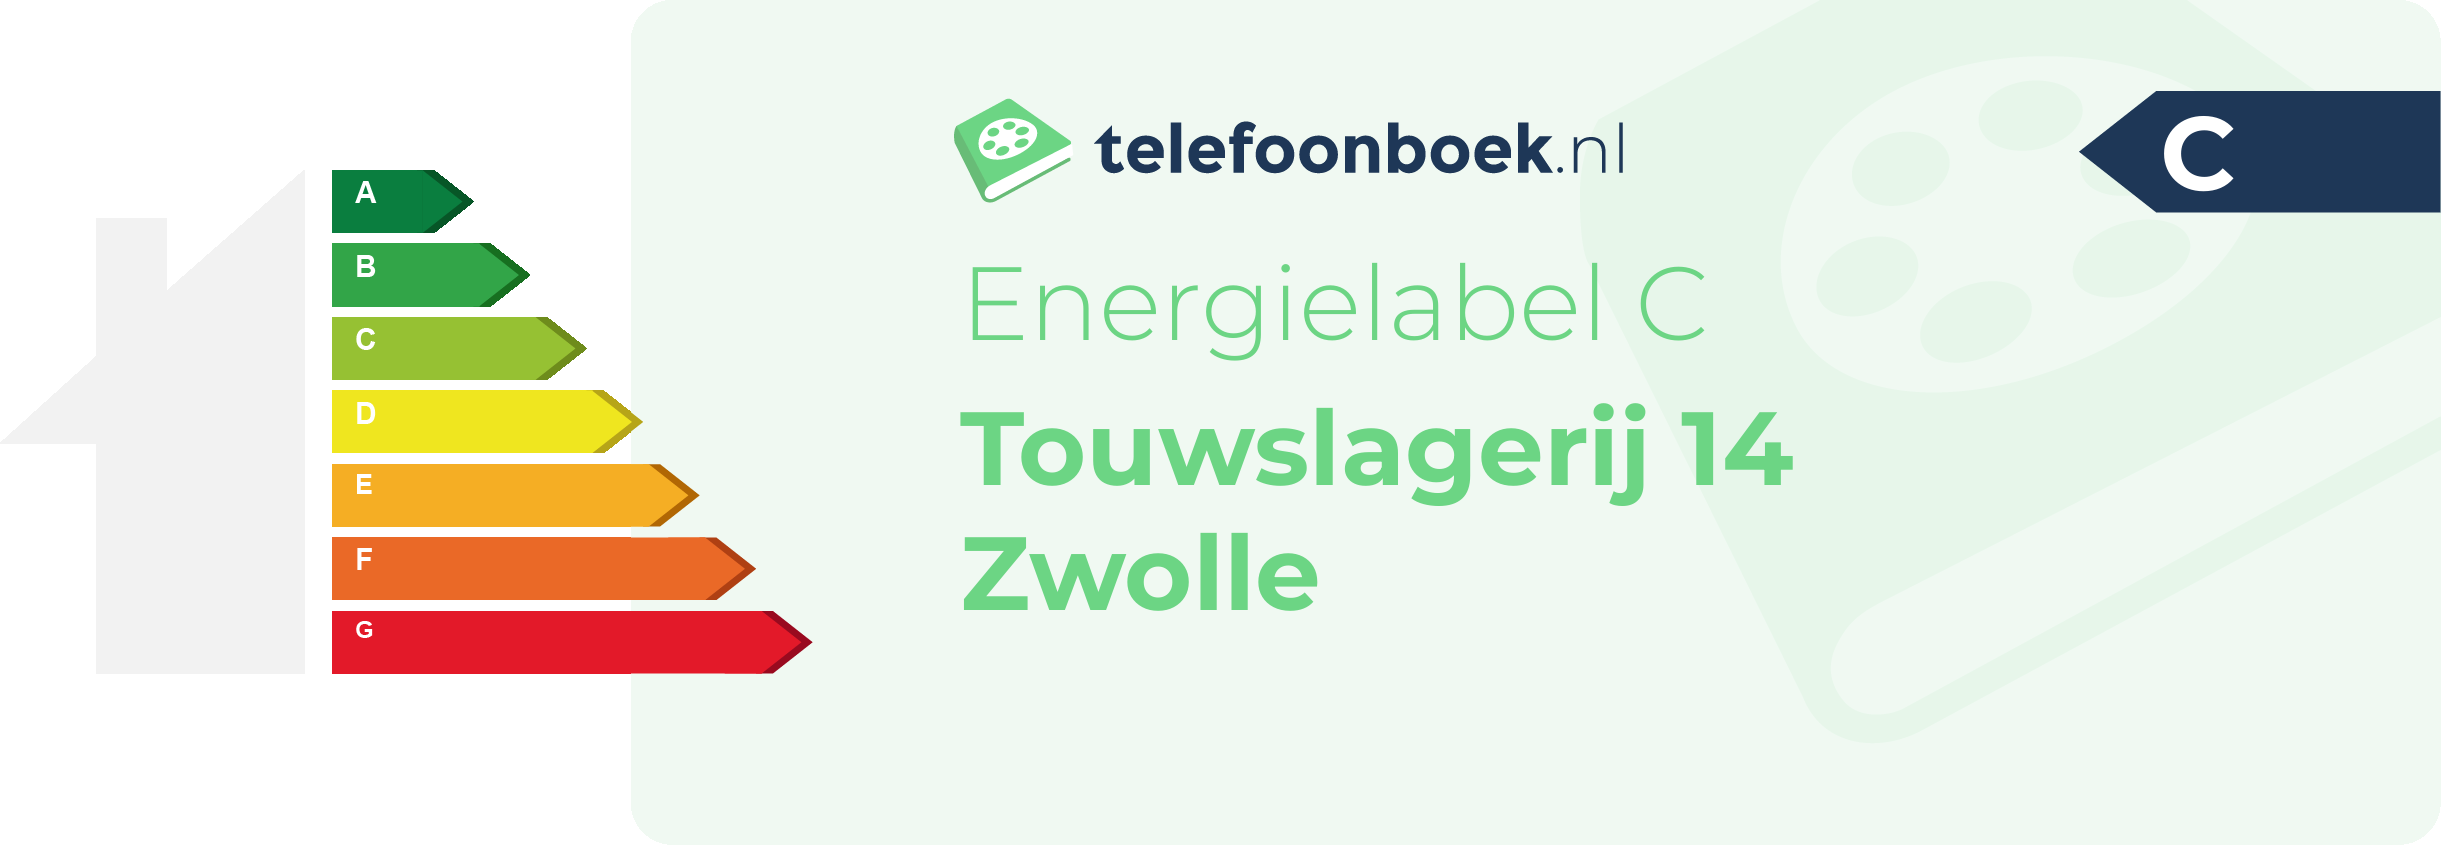 Energielabel Touwslagerij 14 Zwolle